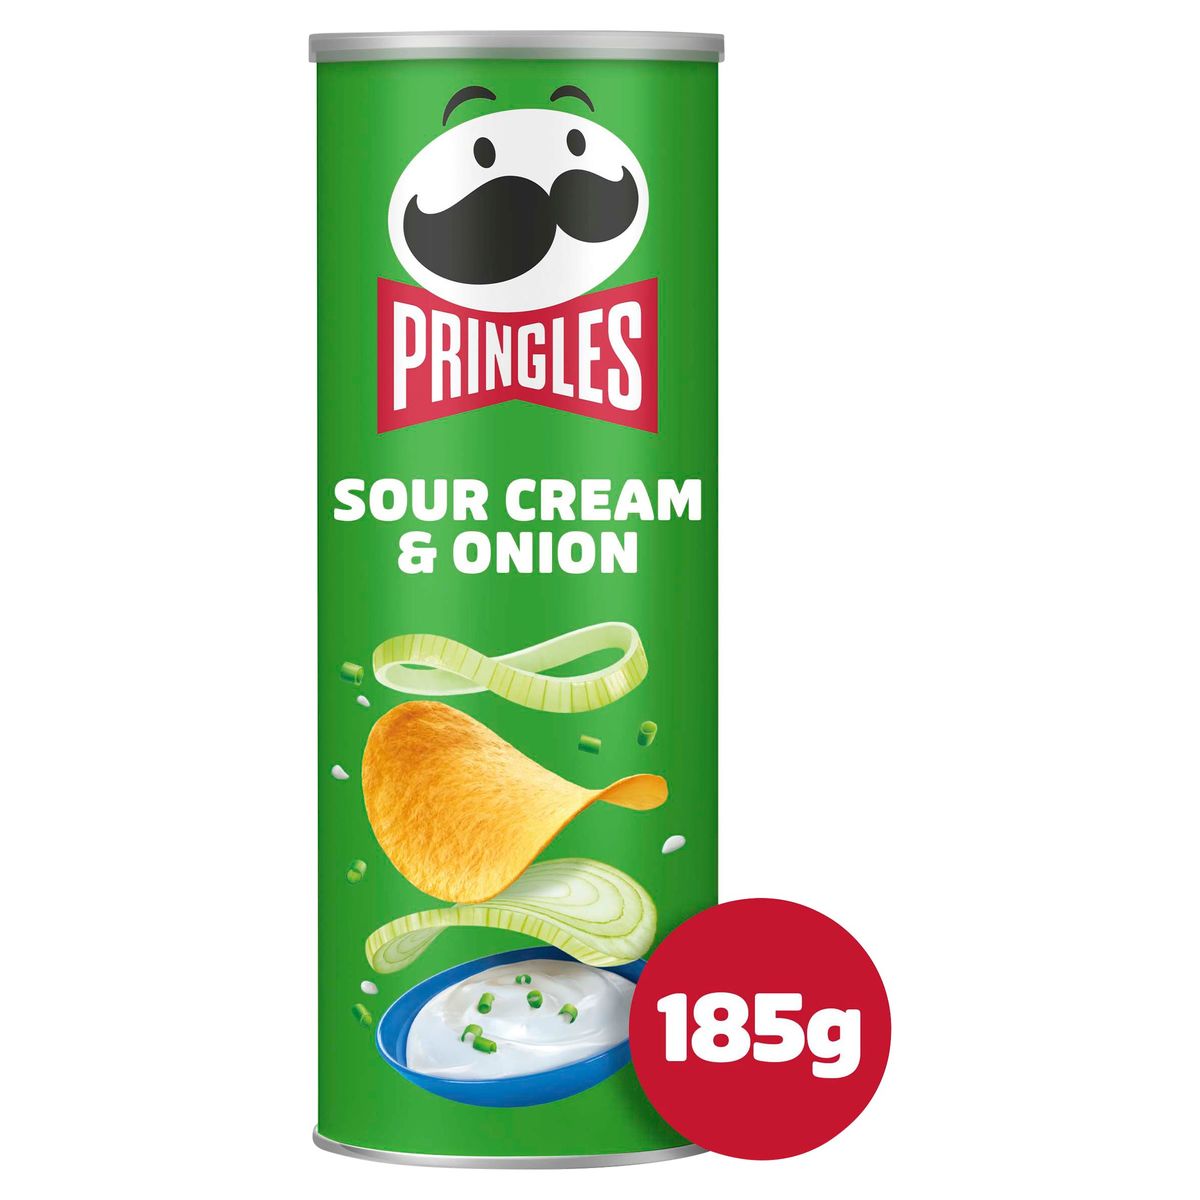 Pringles Sour Cream & Onion chips tuiles 185g